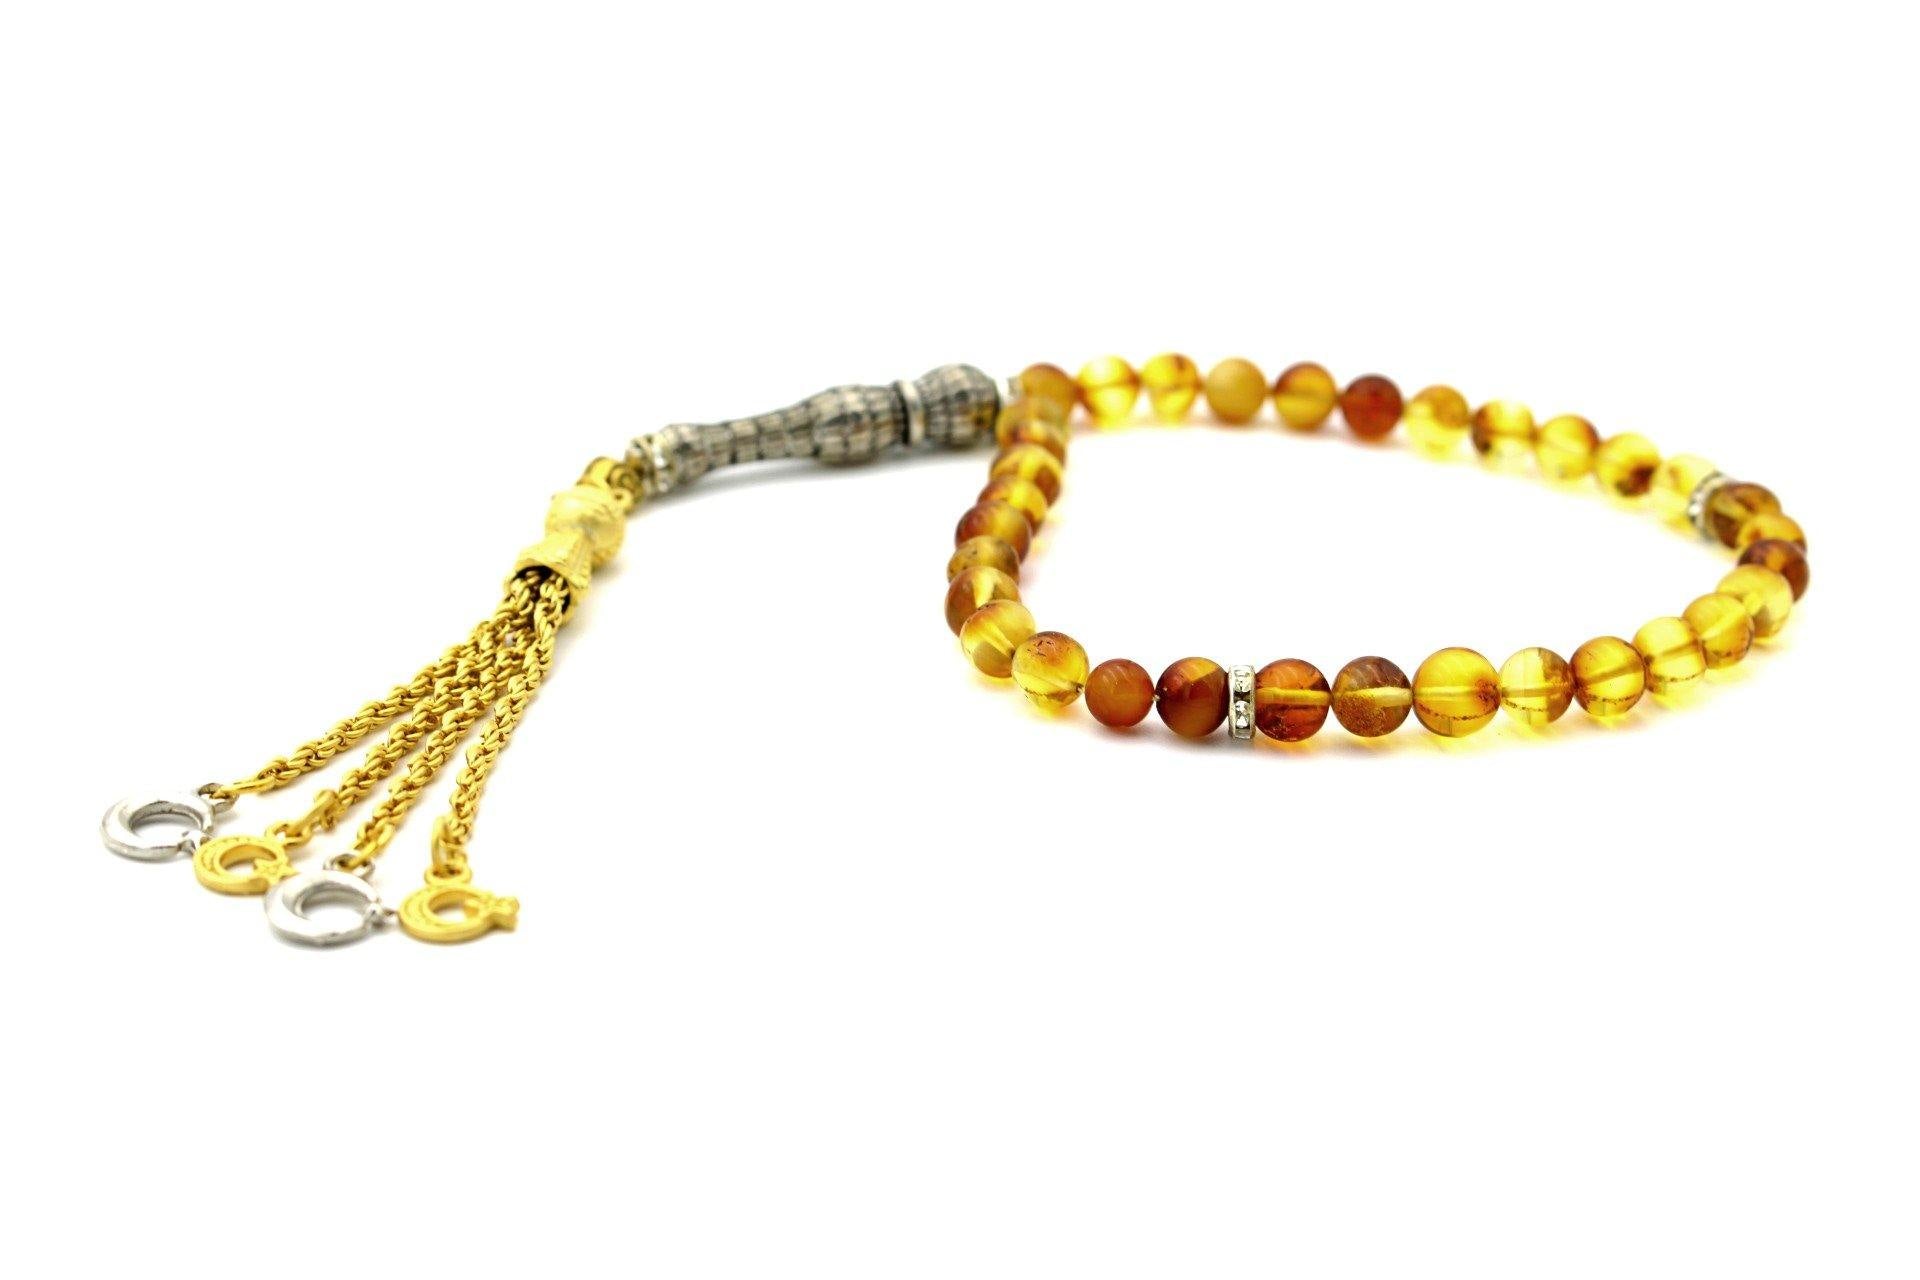 gemstones baltic amber beads for sale near me uk luxury r visible islamic beads tasbih